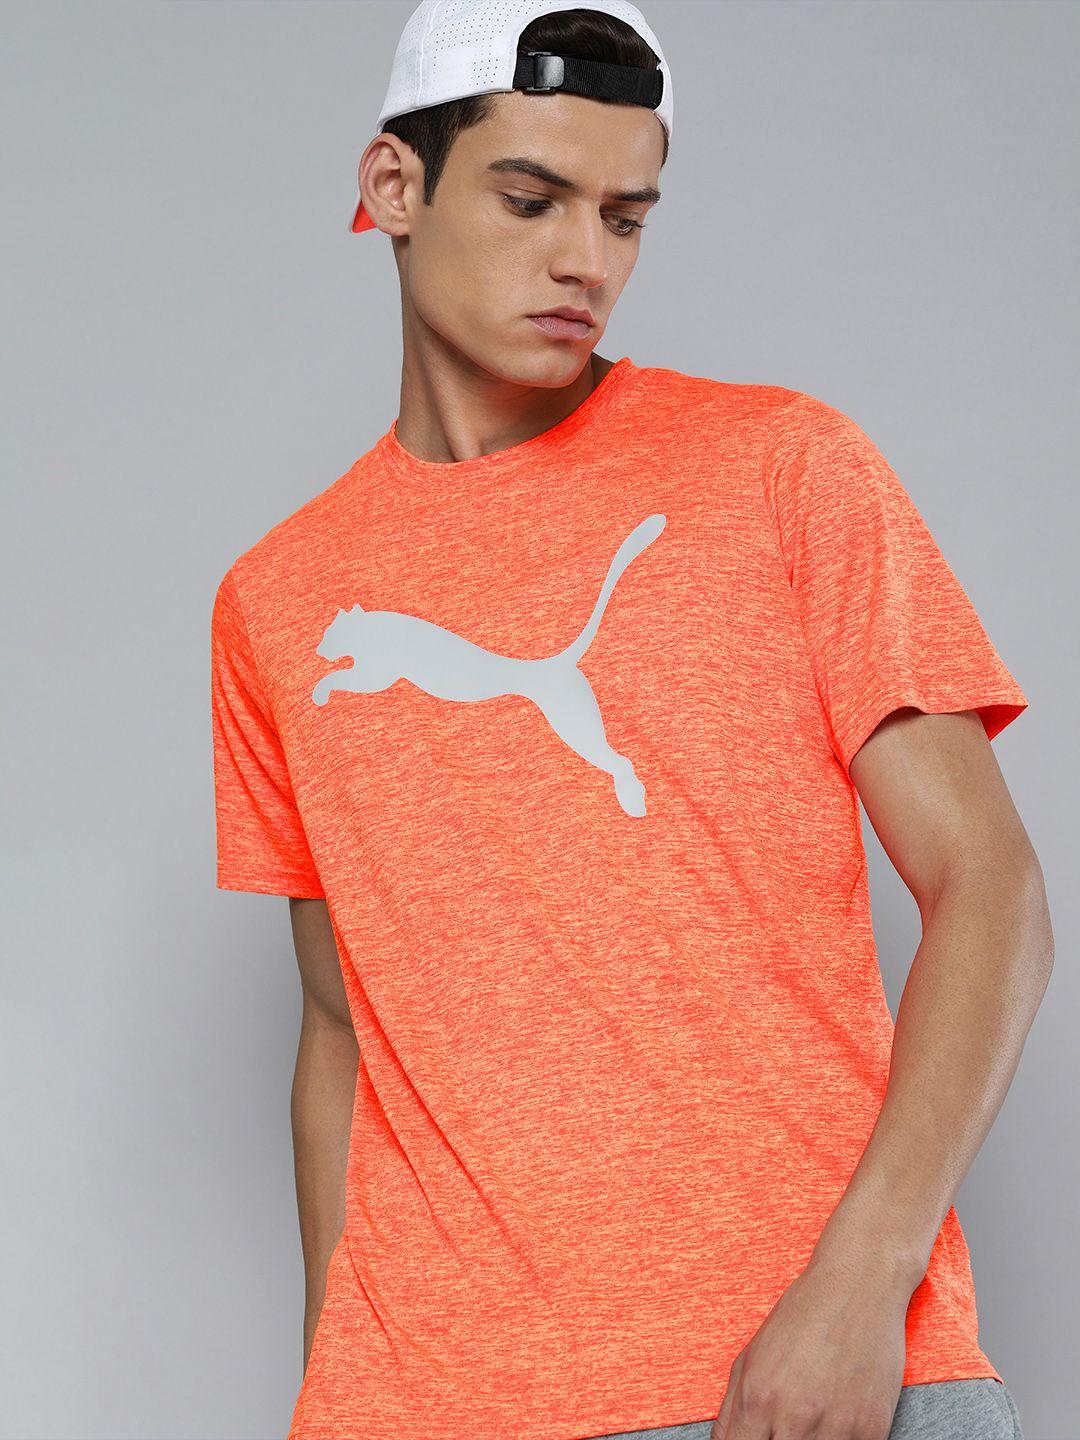 puma men orange & white brand logo printed training or gym t-shirt